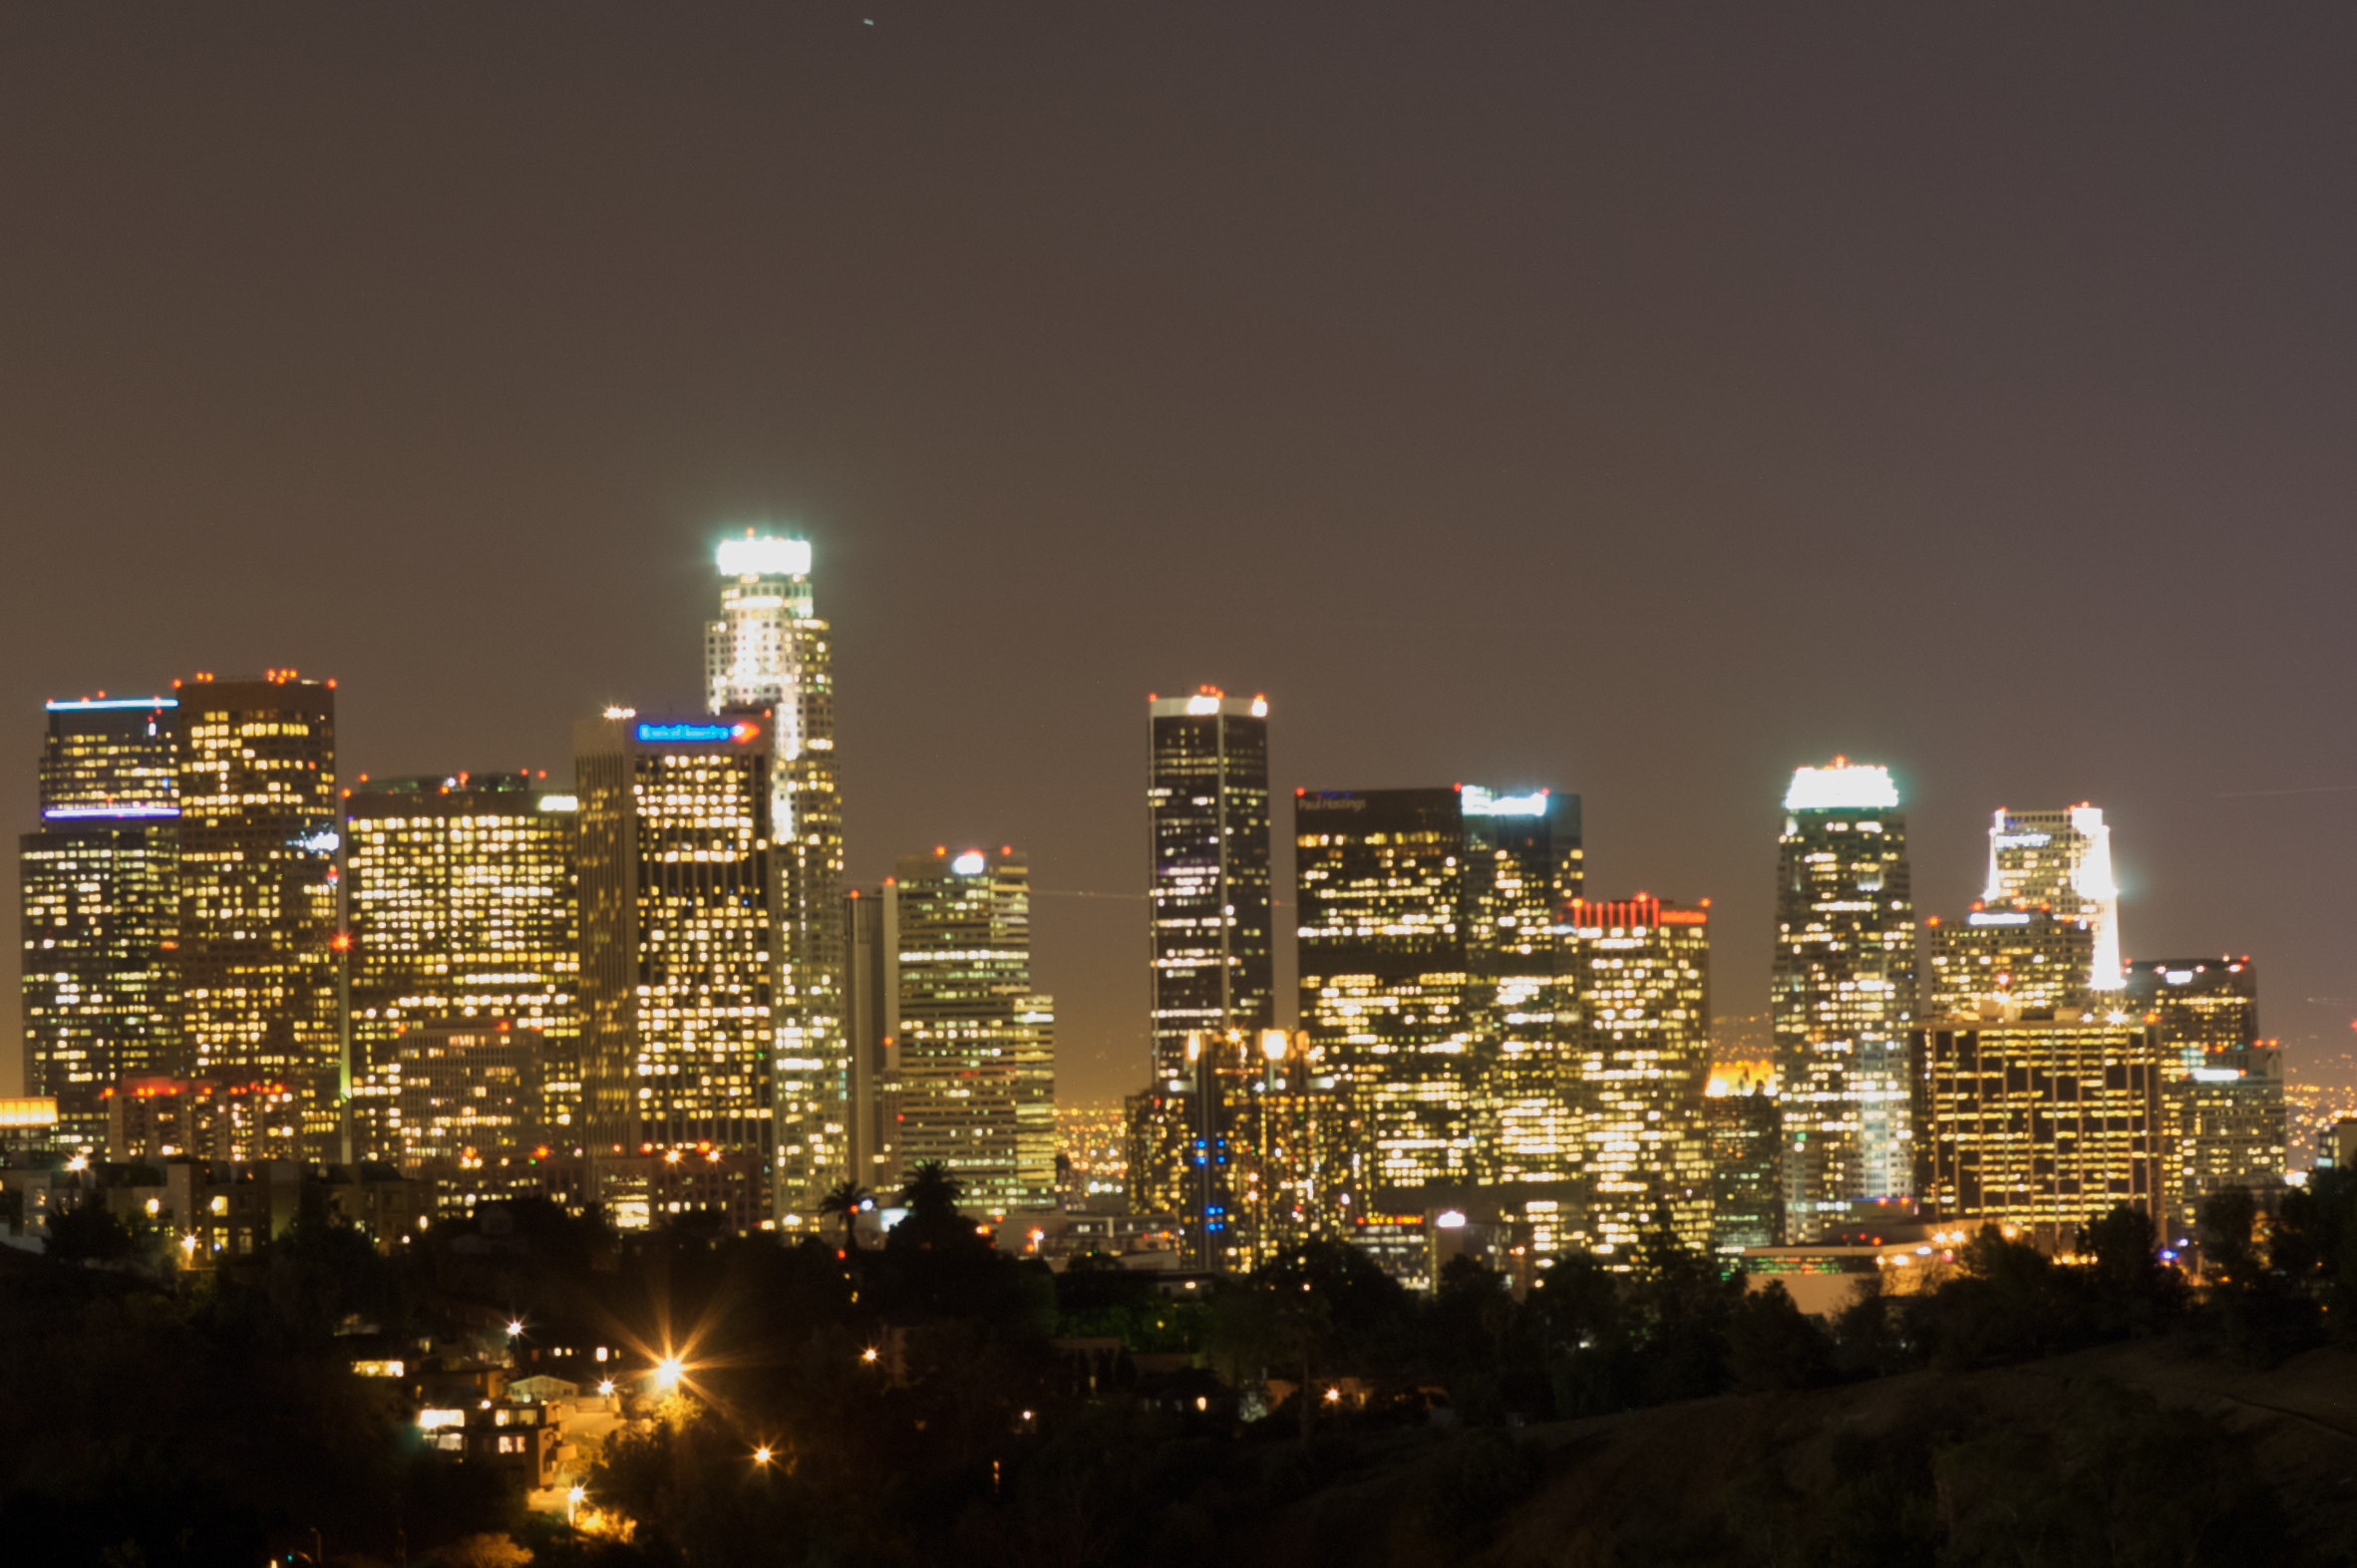 Los_Angeles_Skyline_at_Night